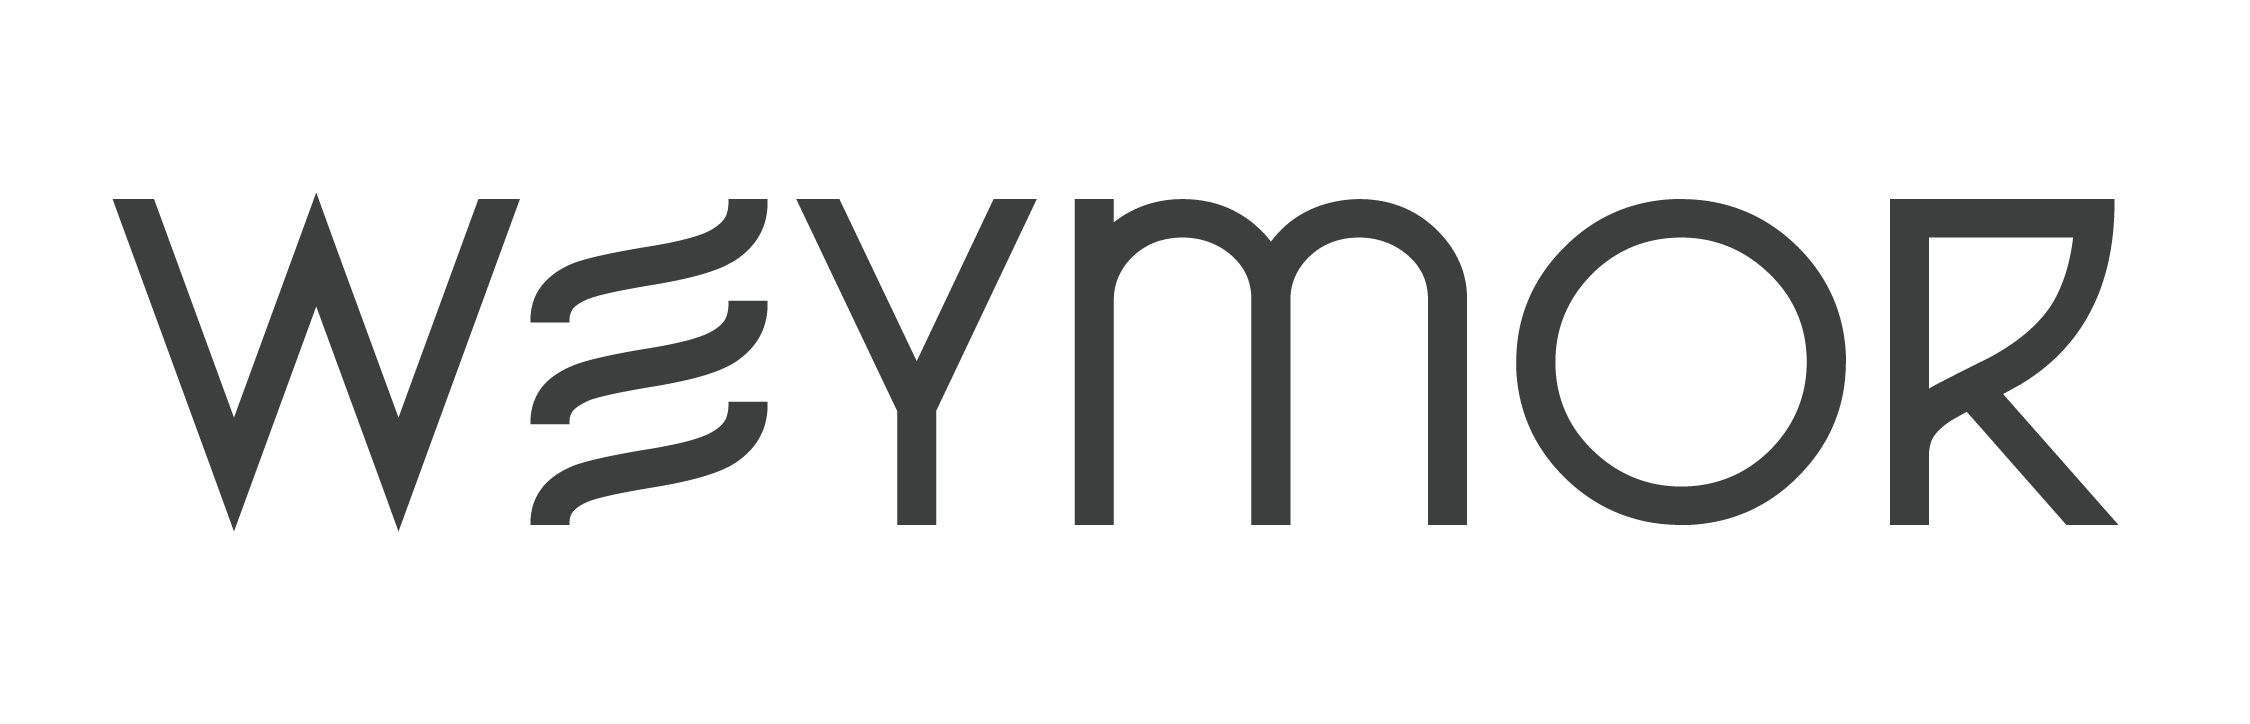 Weymor Logo gray